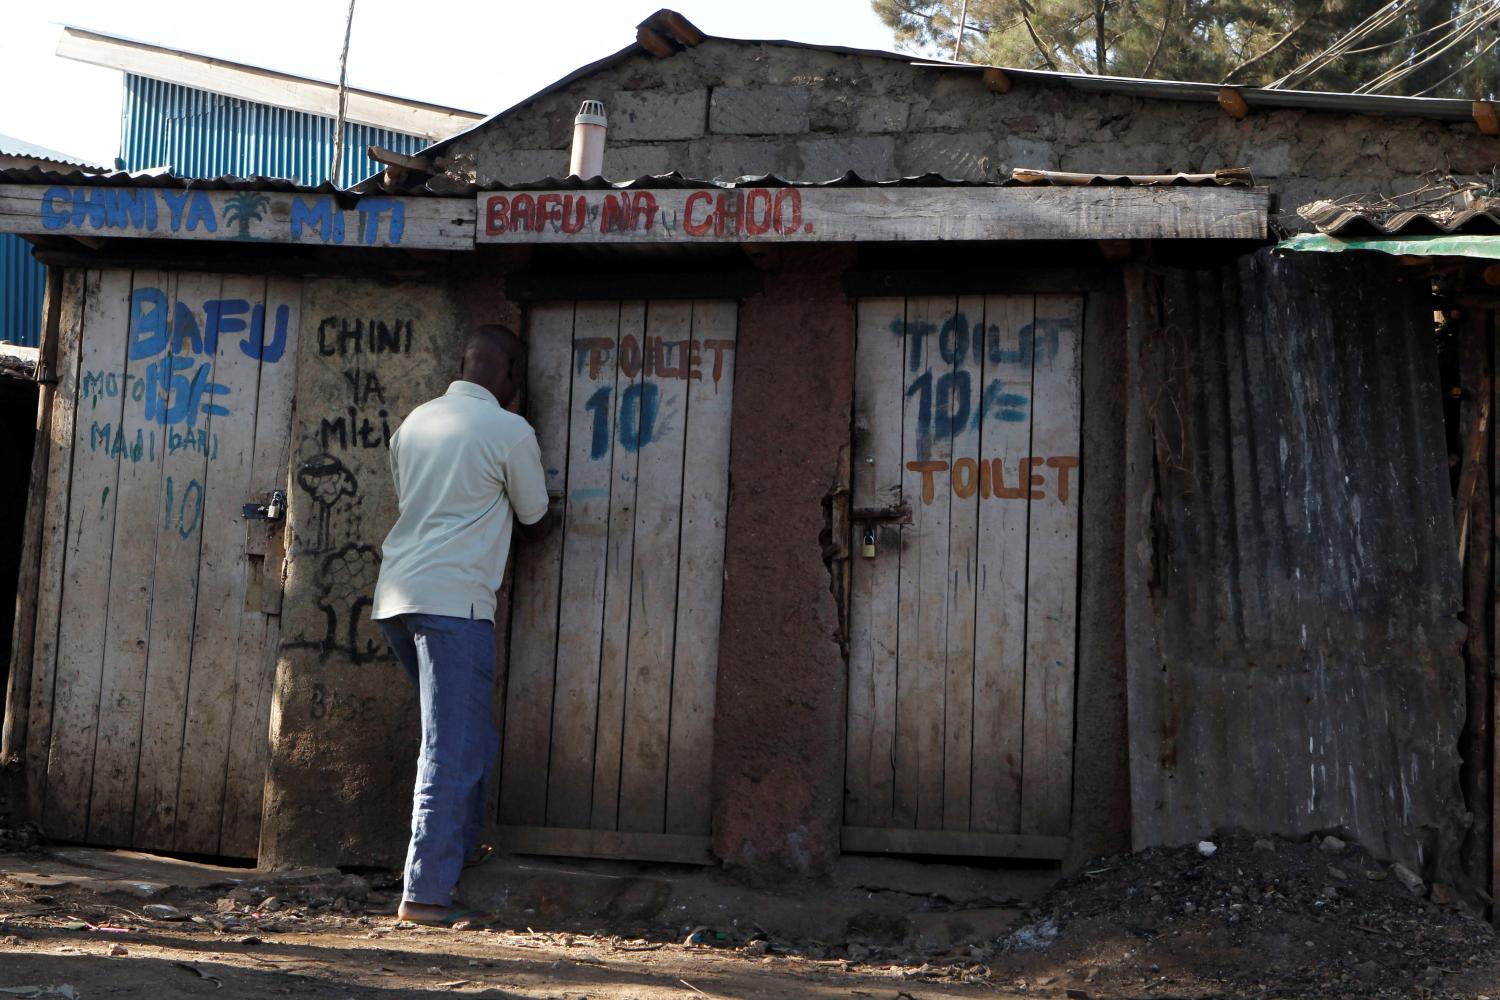 A slum dweller opens the door of a pay pit latrine in Kibera slum within Nairobi, Kenya February 27, 2019. Picture taken February 27, 2019. REUTERS/Njeri Mwangi